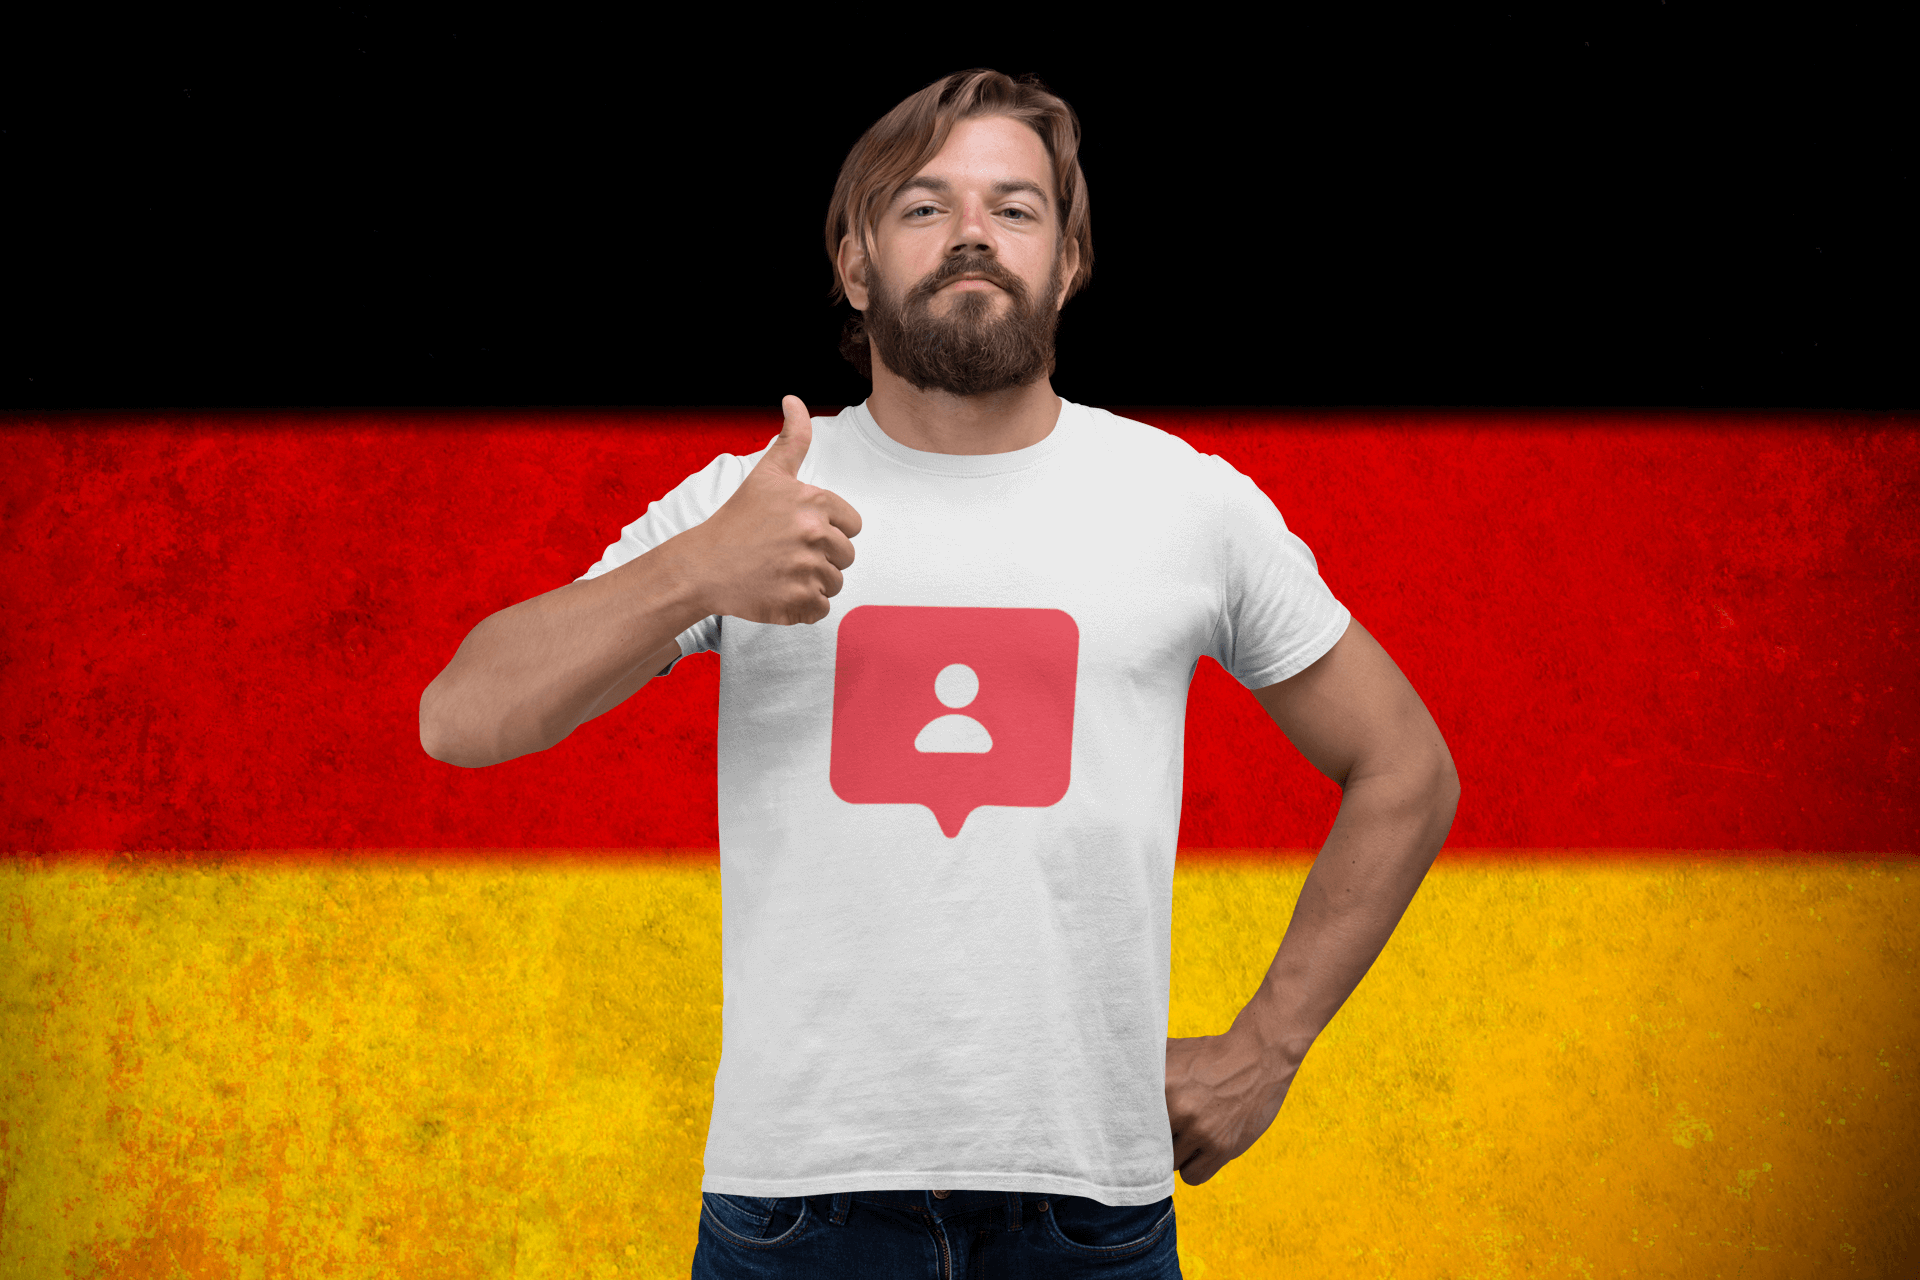 buy premium instagram followers from Germany